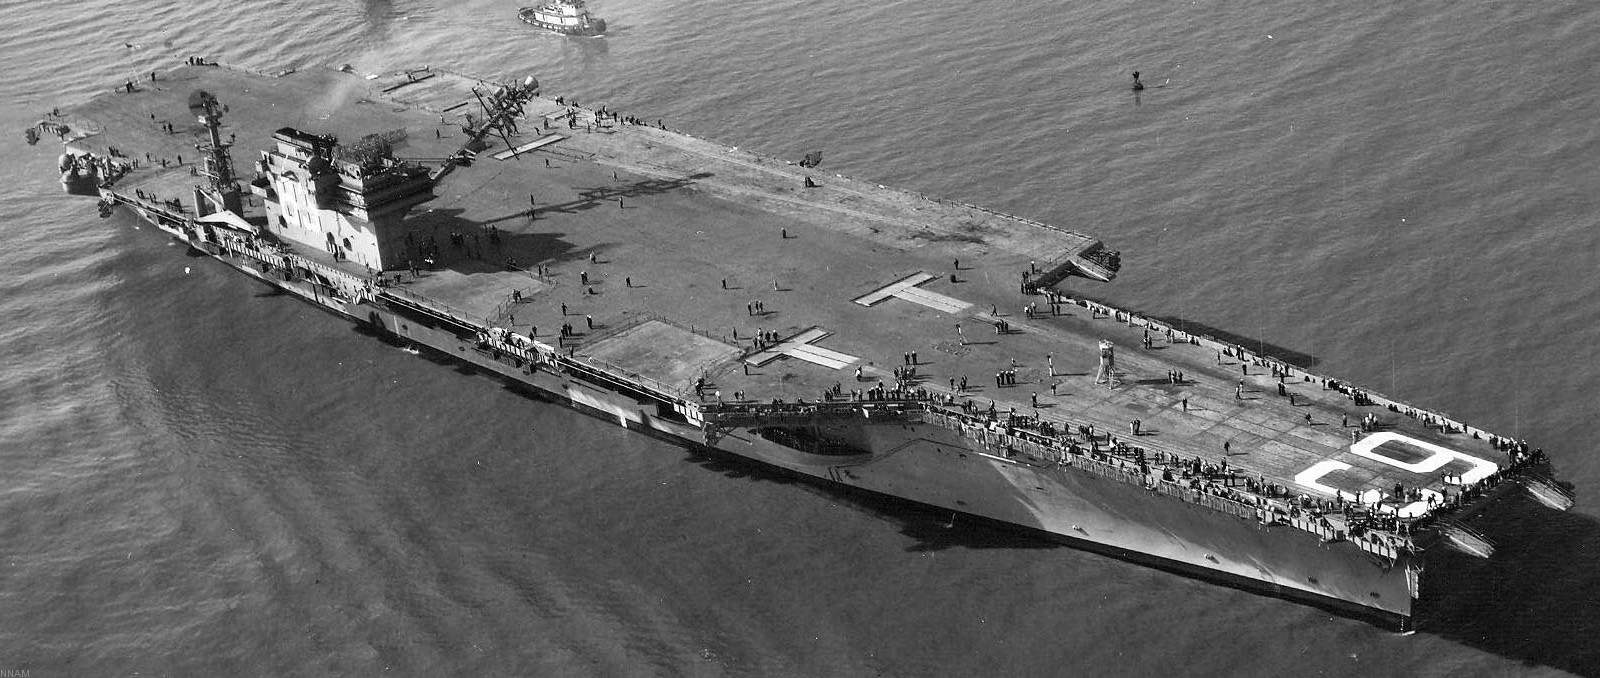 cva-63 uss kitty hawk aircraft carrier 267